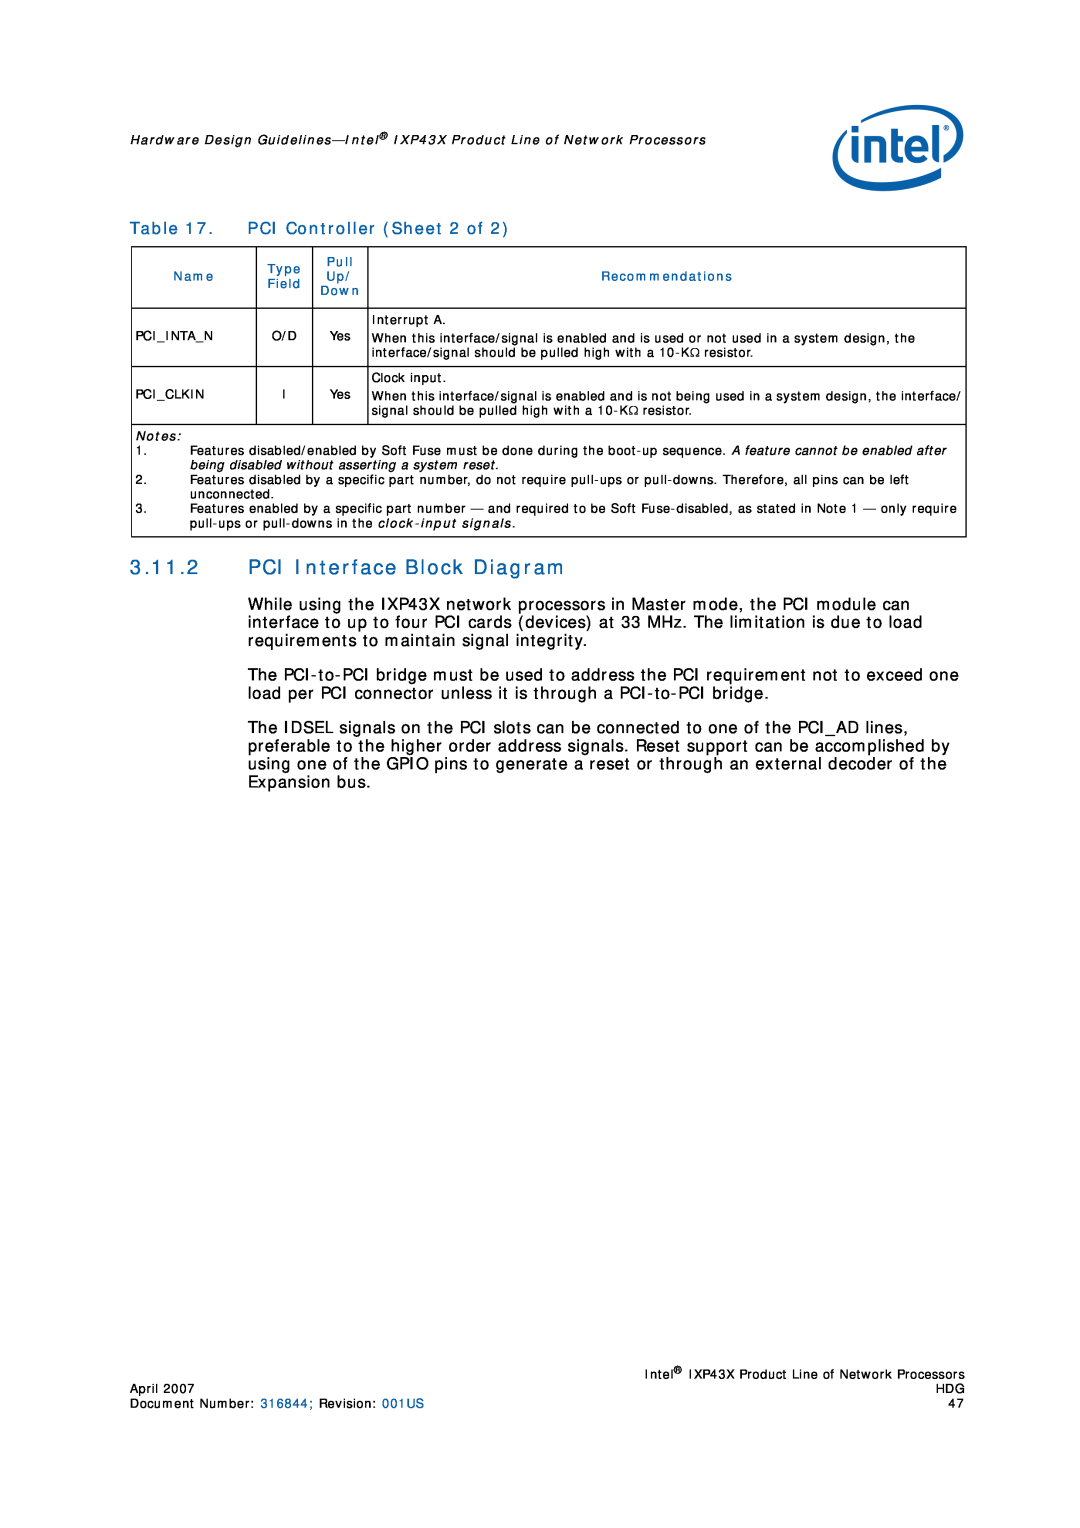 Intel IXP43X manual PCI Interface Block Diagram, PCI Controller Sheet 2 of 